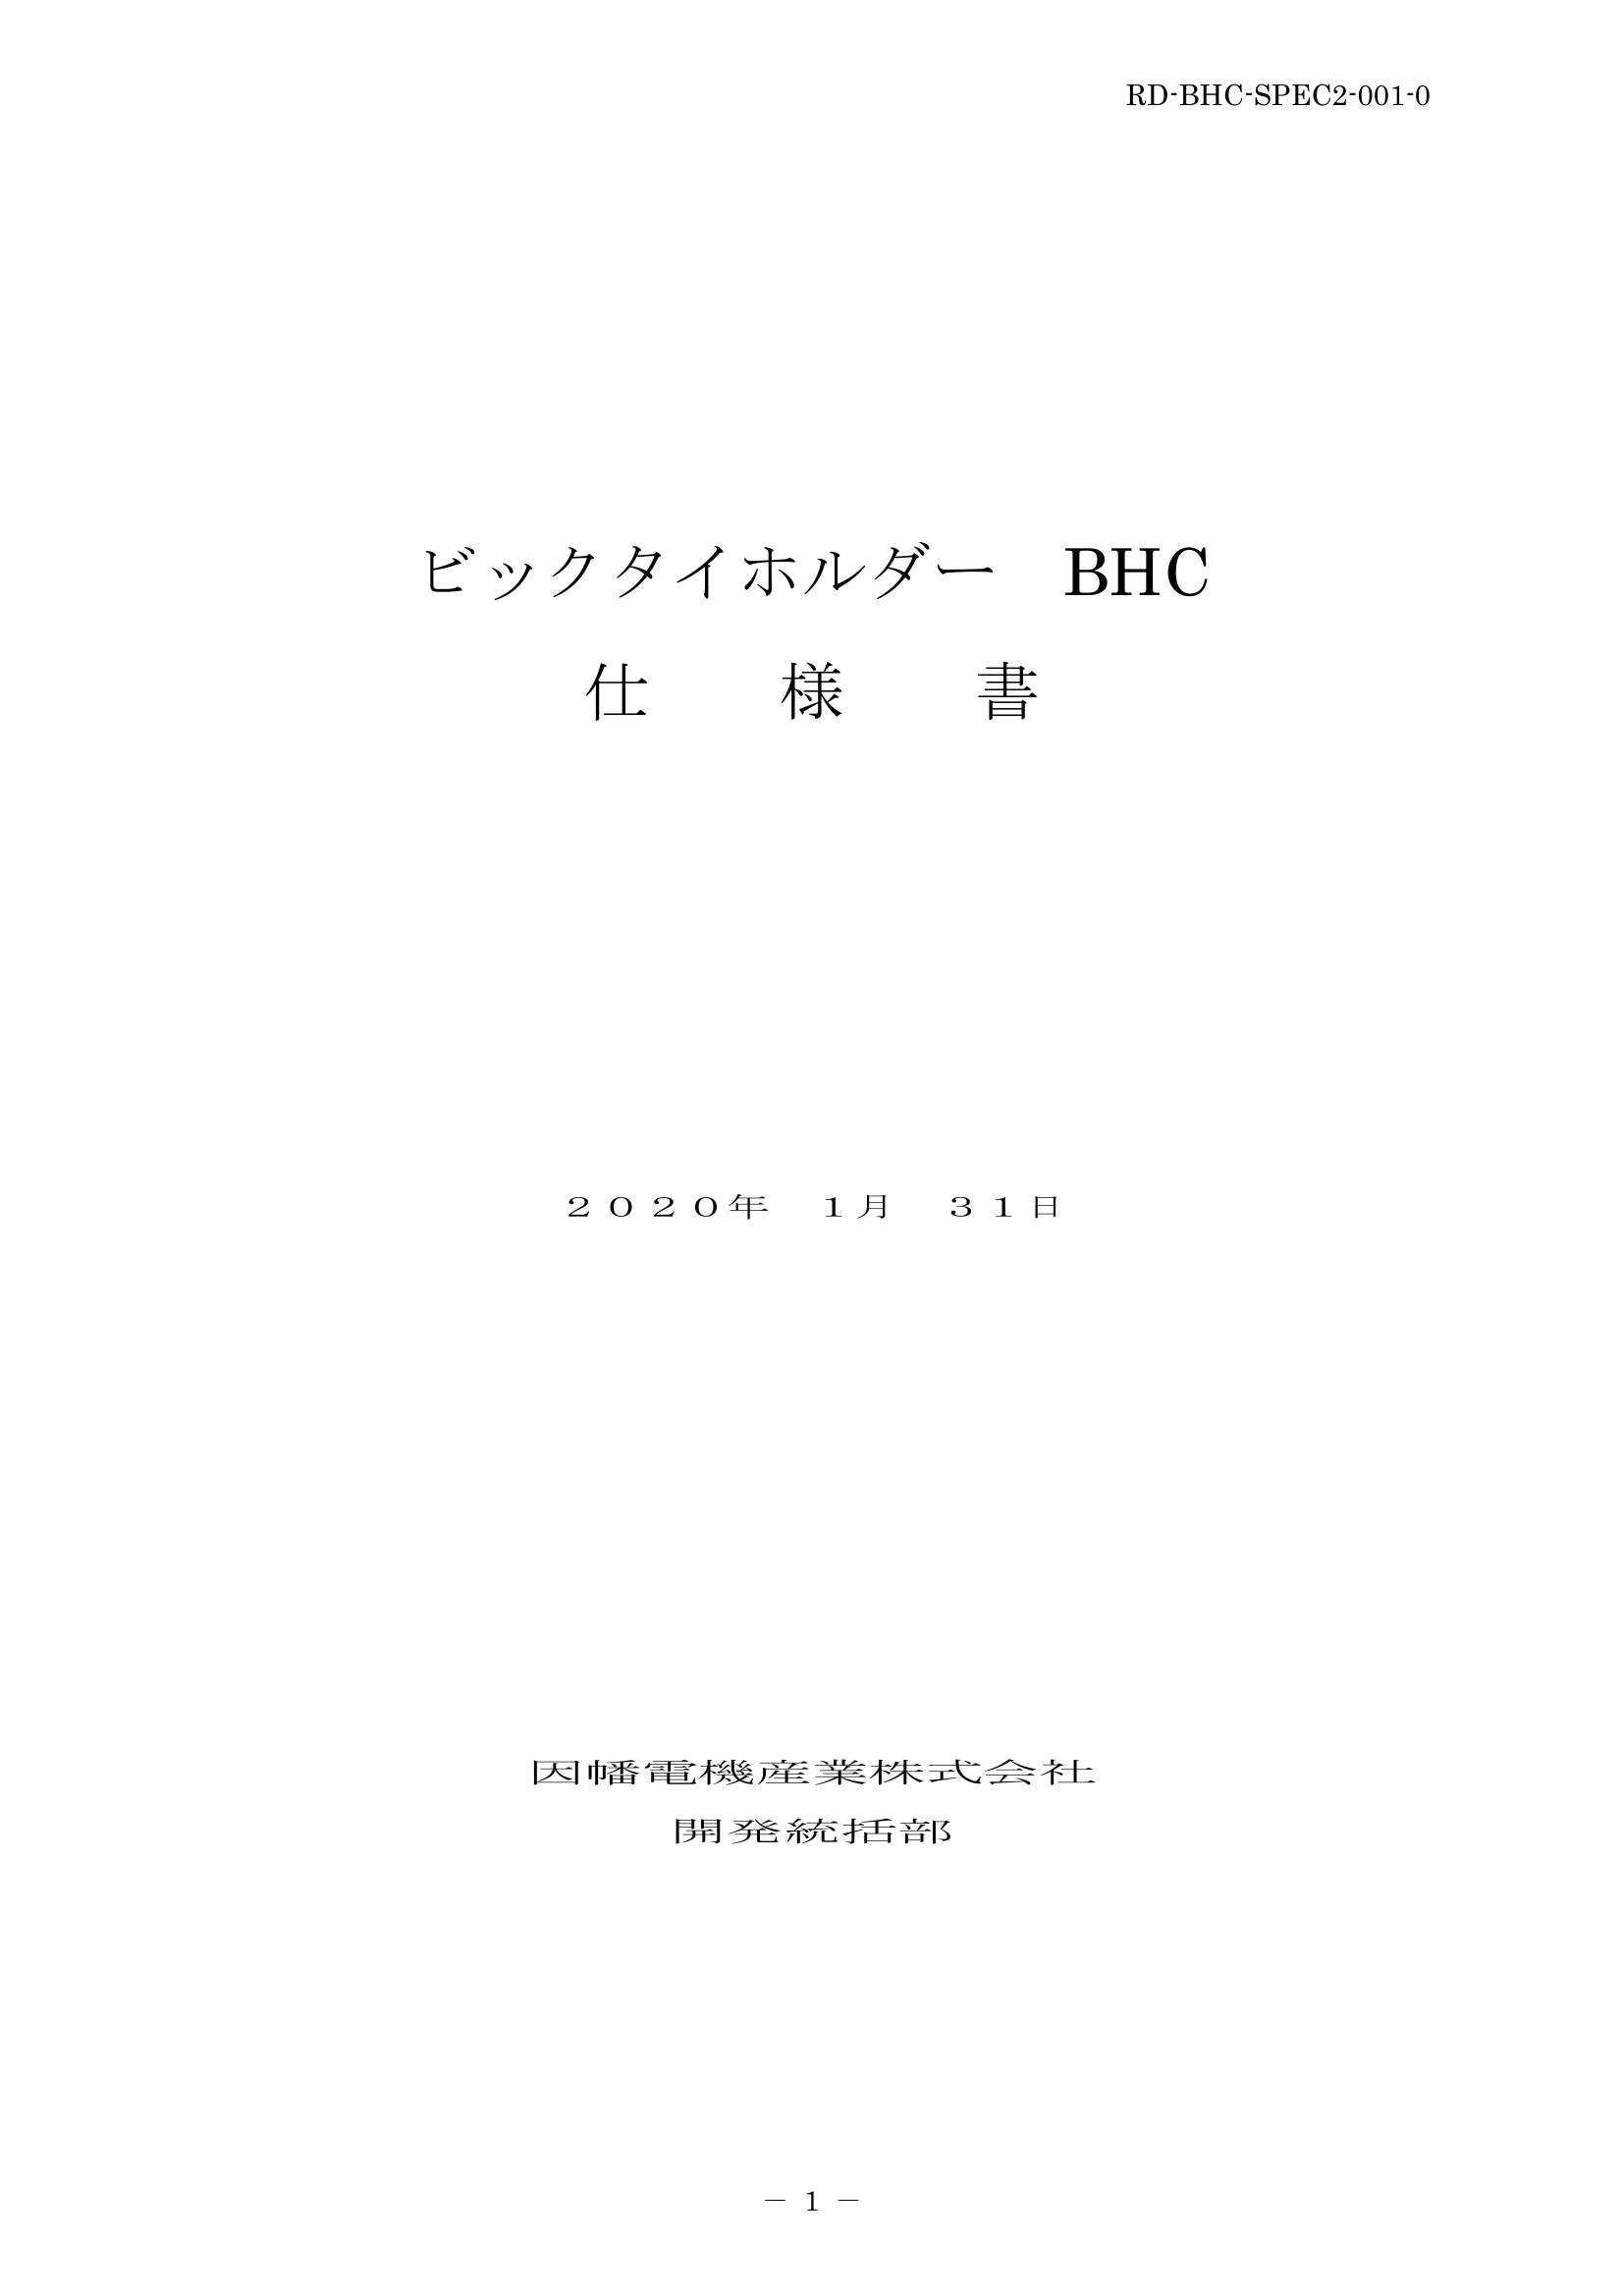 BHC_仕様書_20200131.pdf